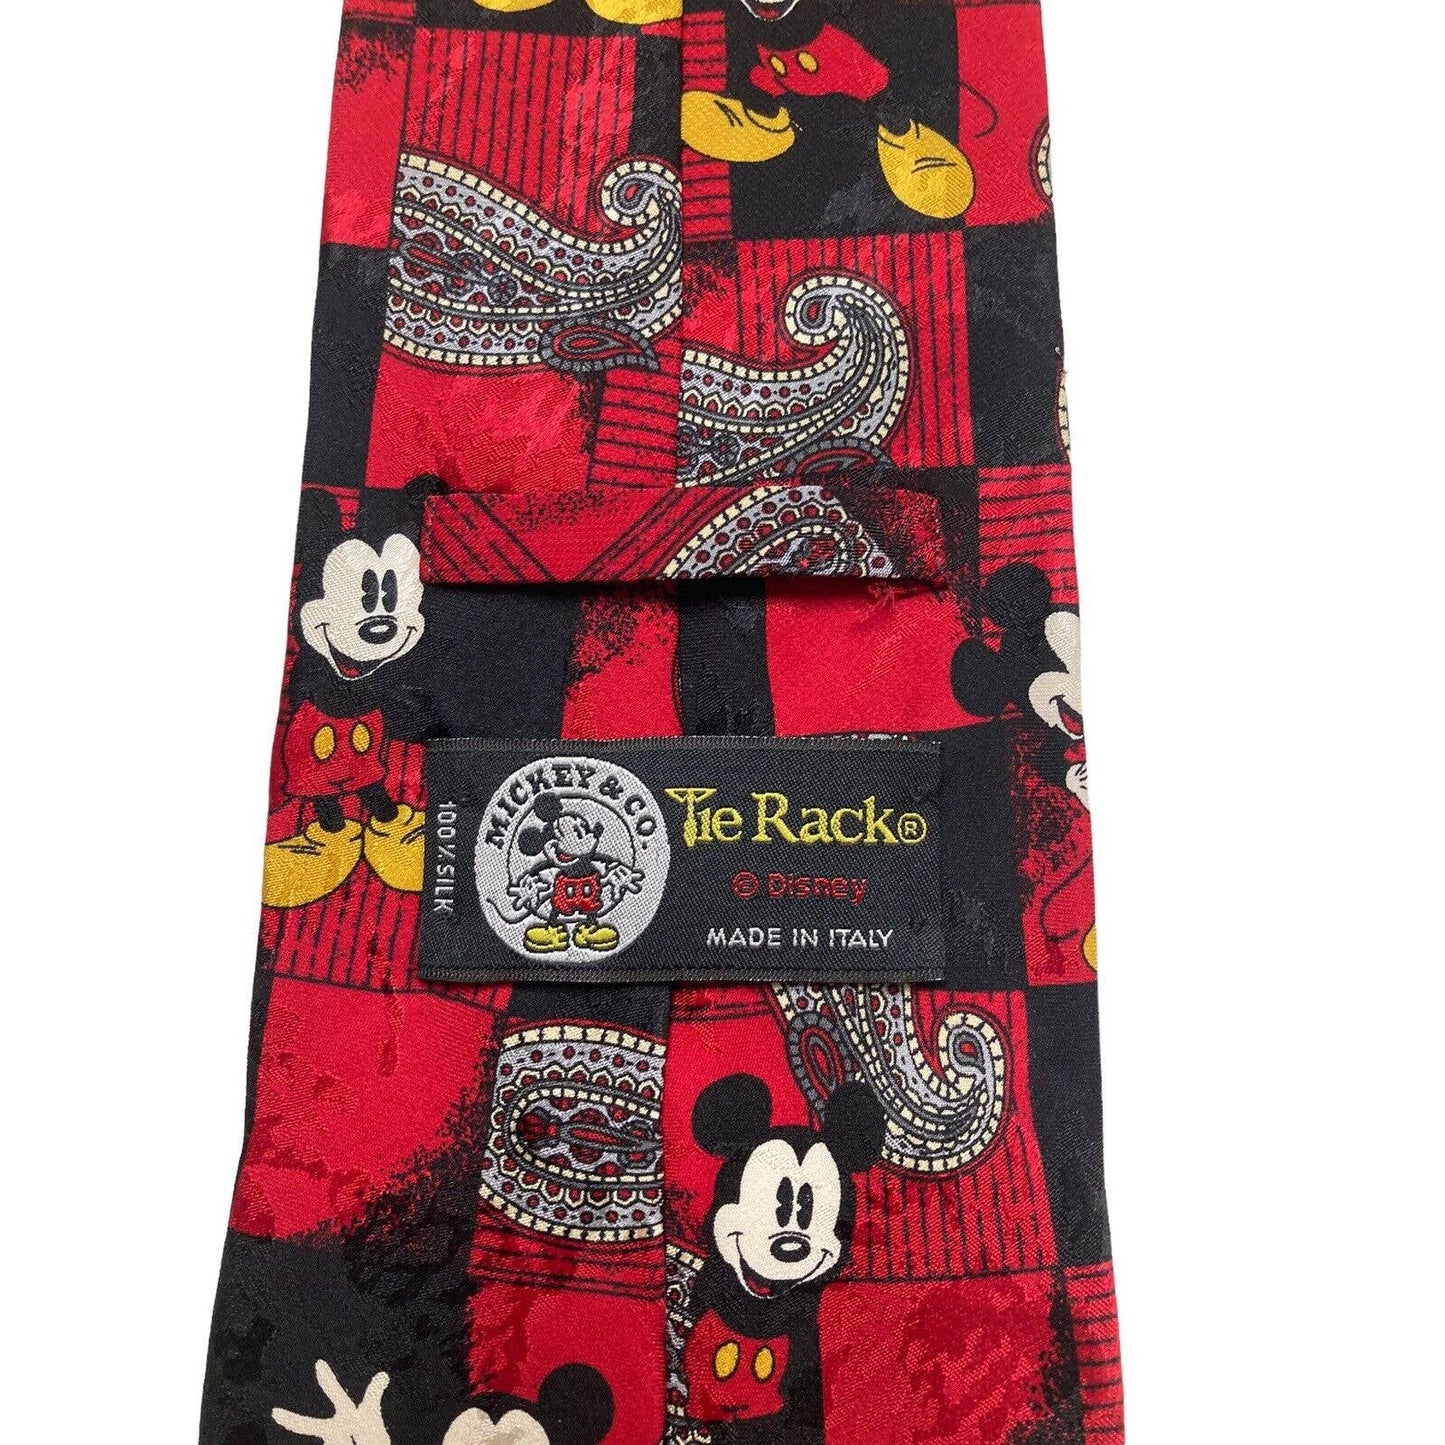 Disney Tie Rack Mickey Mouse Paisley Novelty Vintage Necktie 100% Silk Black Red